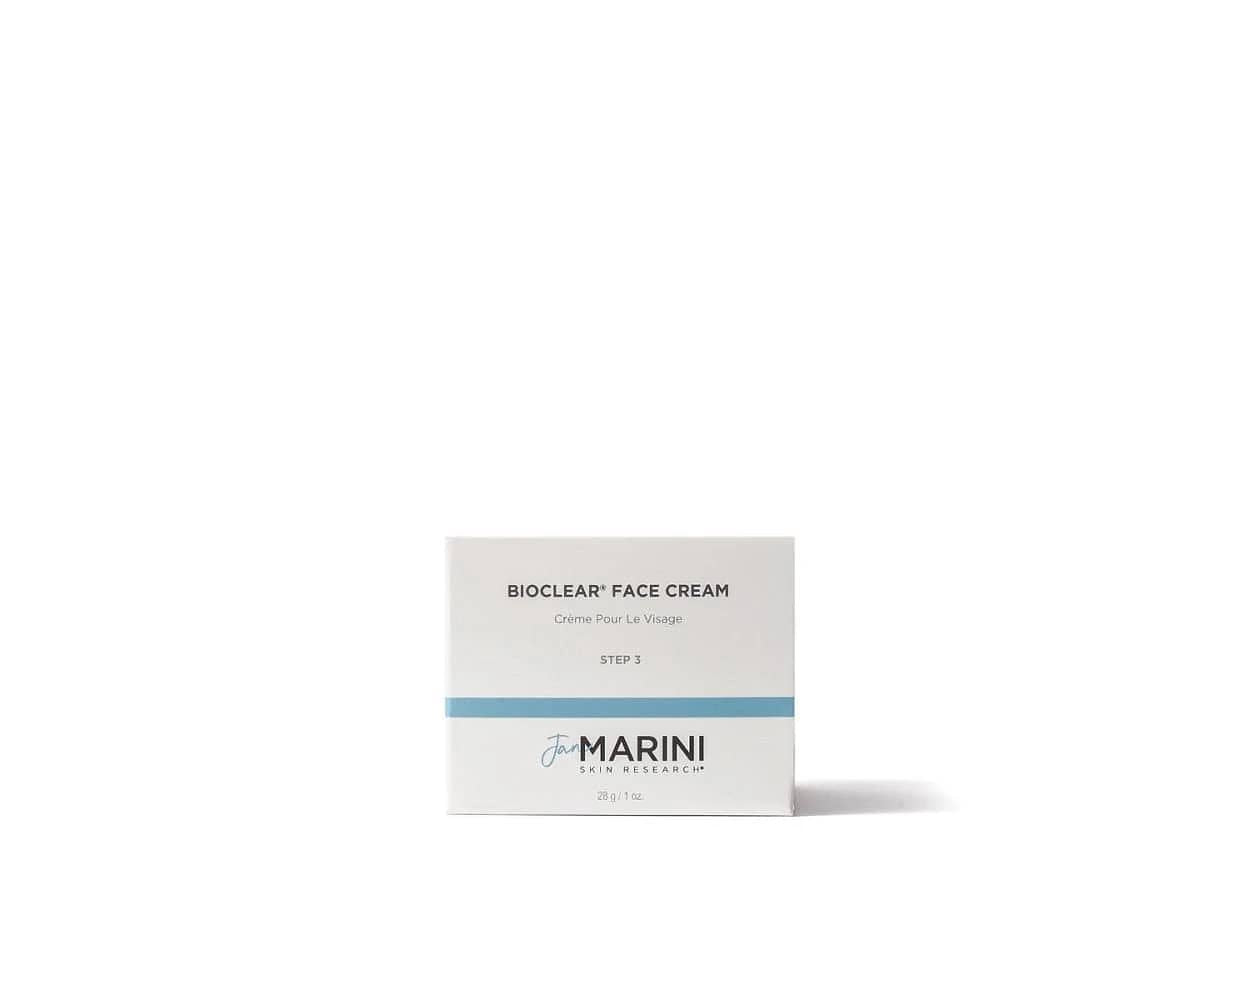 Jan Marini Bioglycolic Face Cream 59 ml